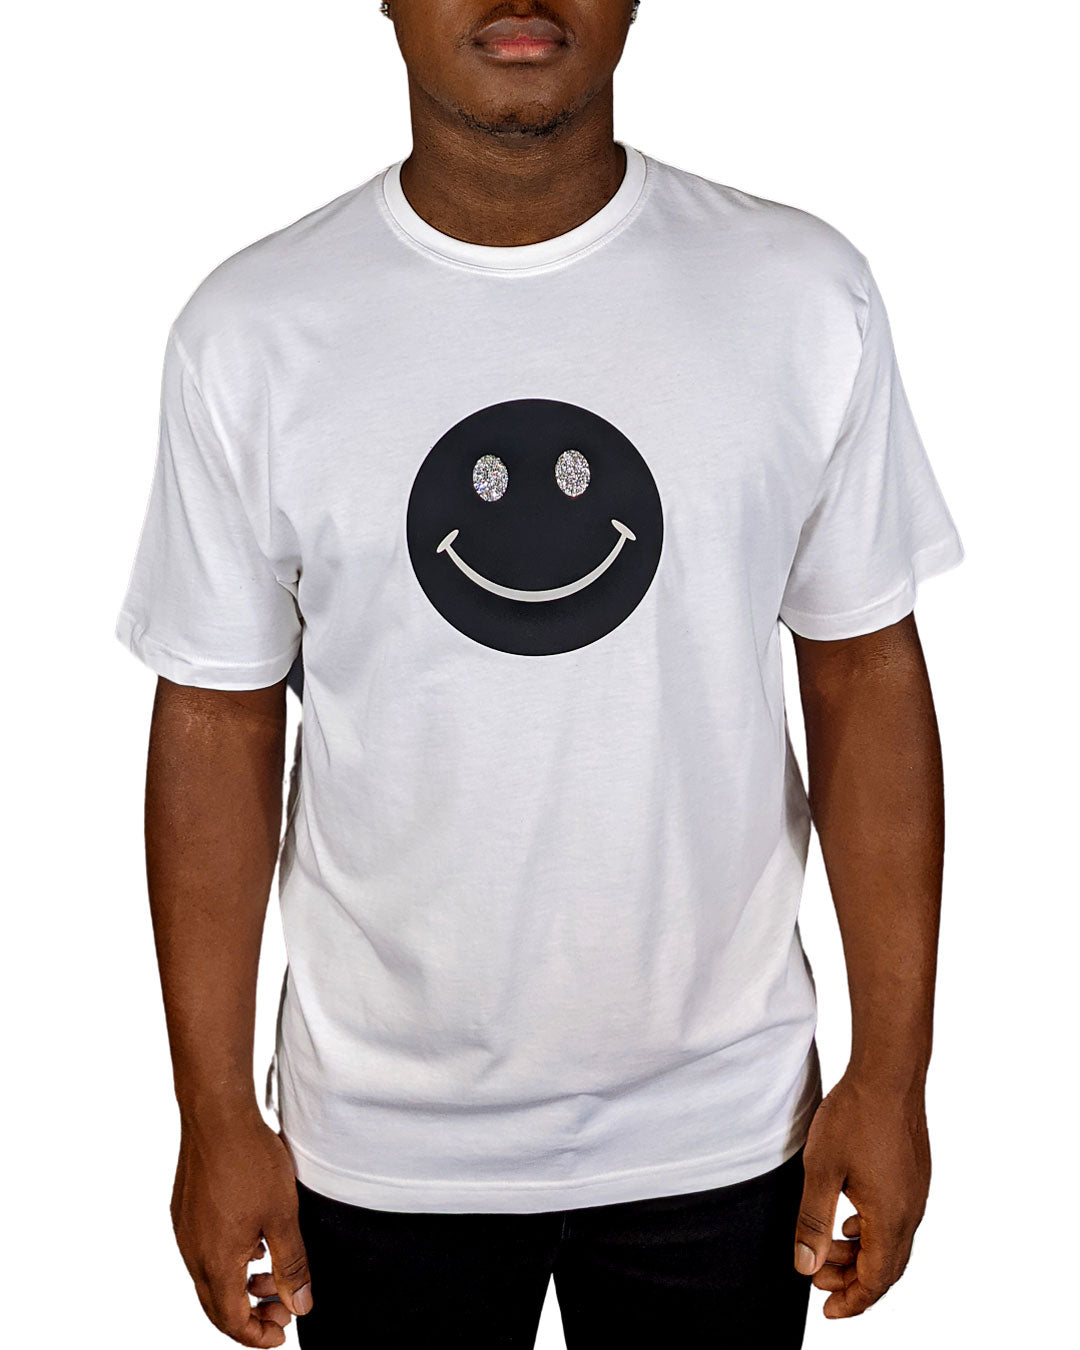 Bright Eyes Smiley Face | Men’s Supima® Cotton T-Shirt